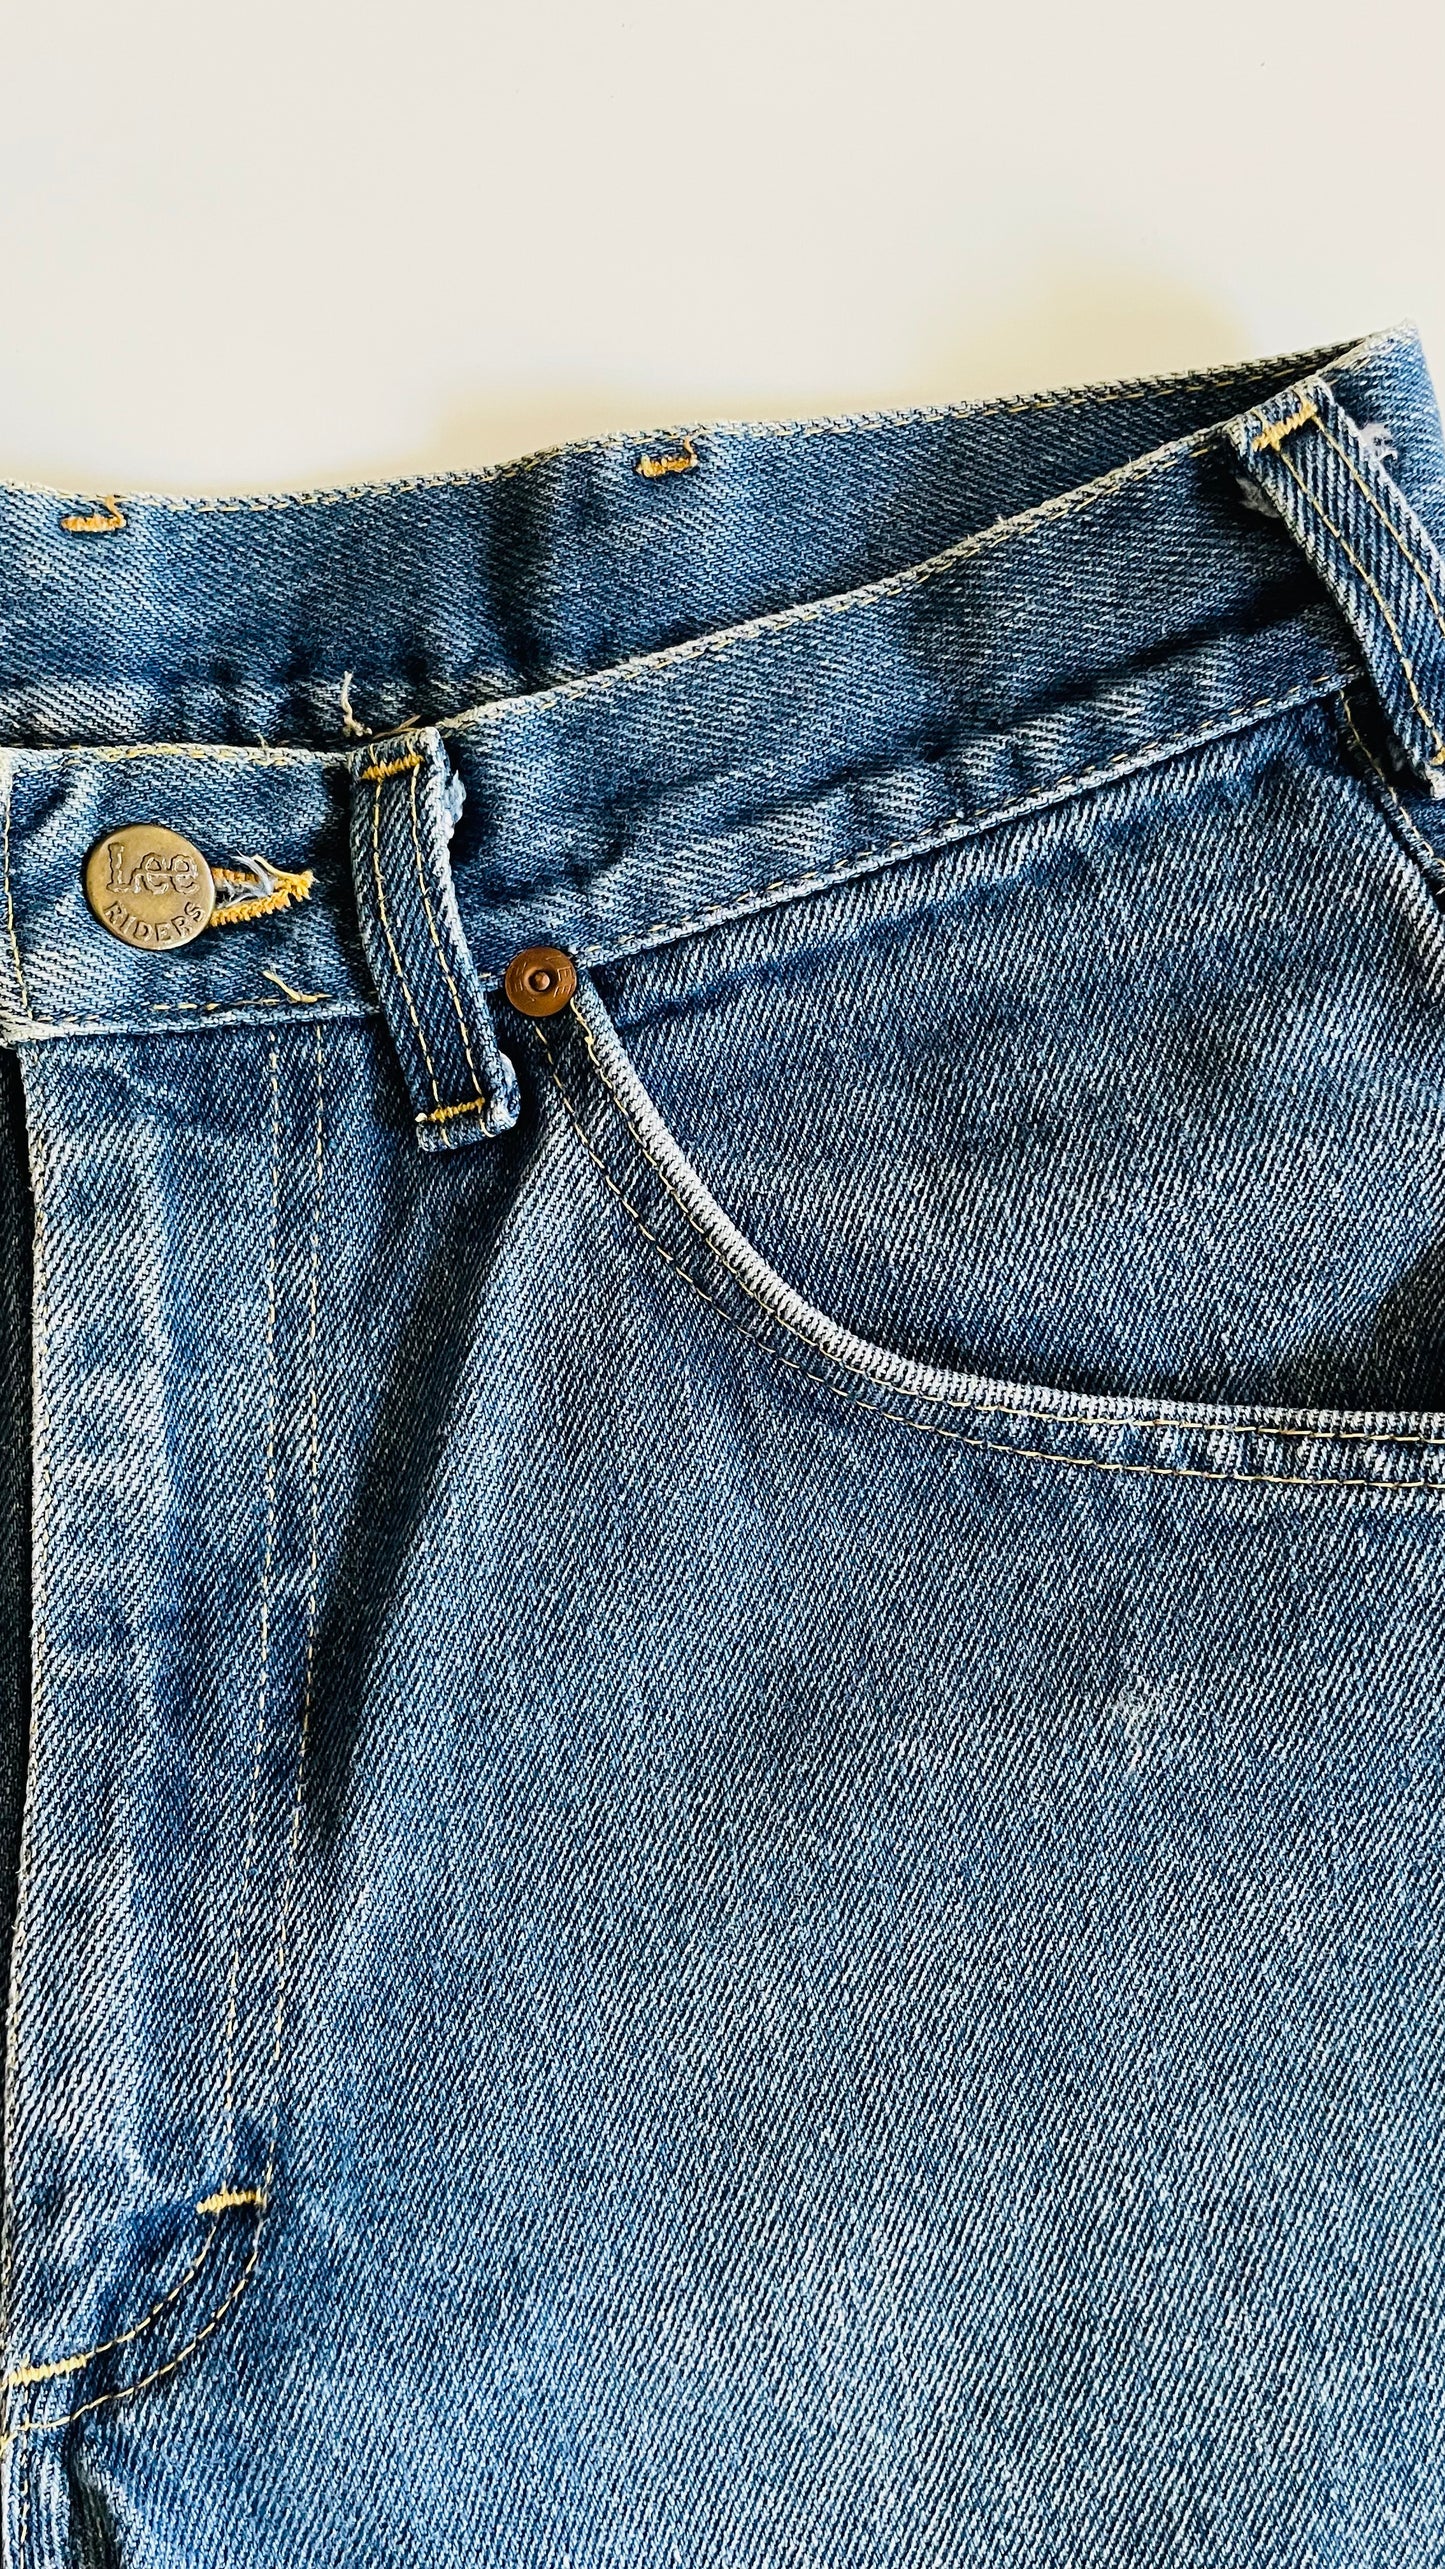 Vintage LEE blue jean shorts - Size 32